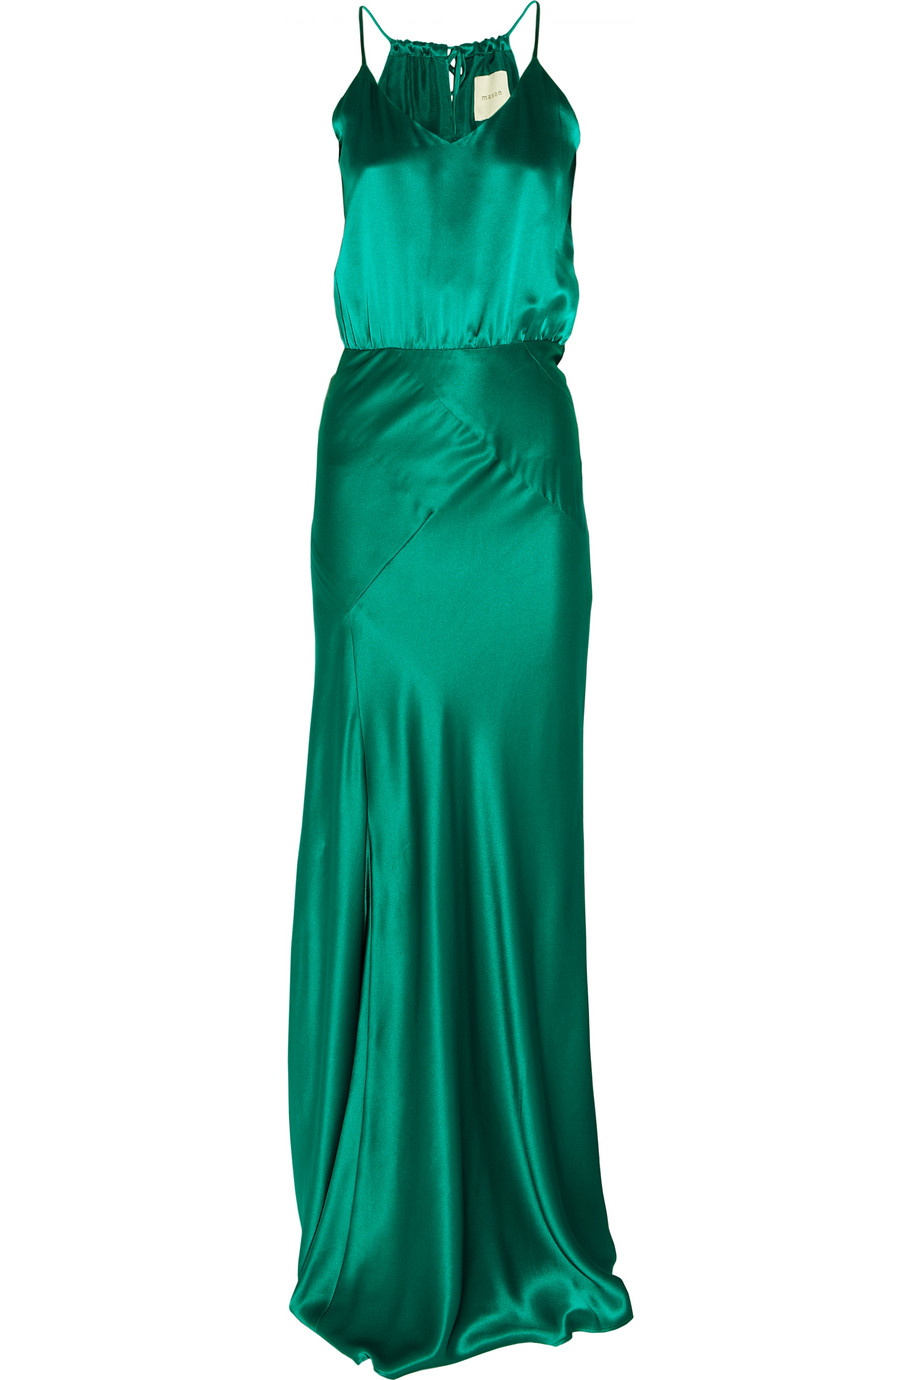 Mason by michelle mason Silk-charmeuse Gown in Green (emerald) | Lyst